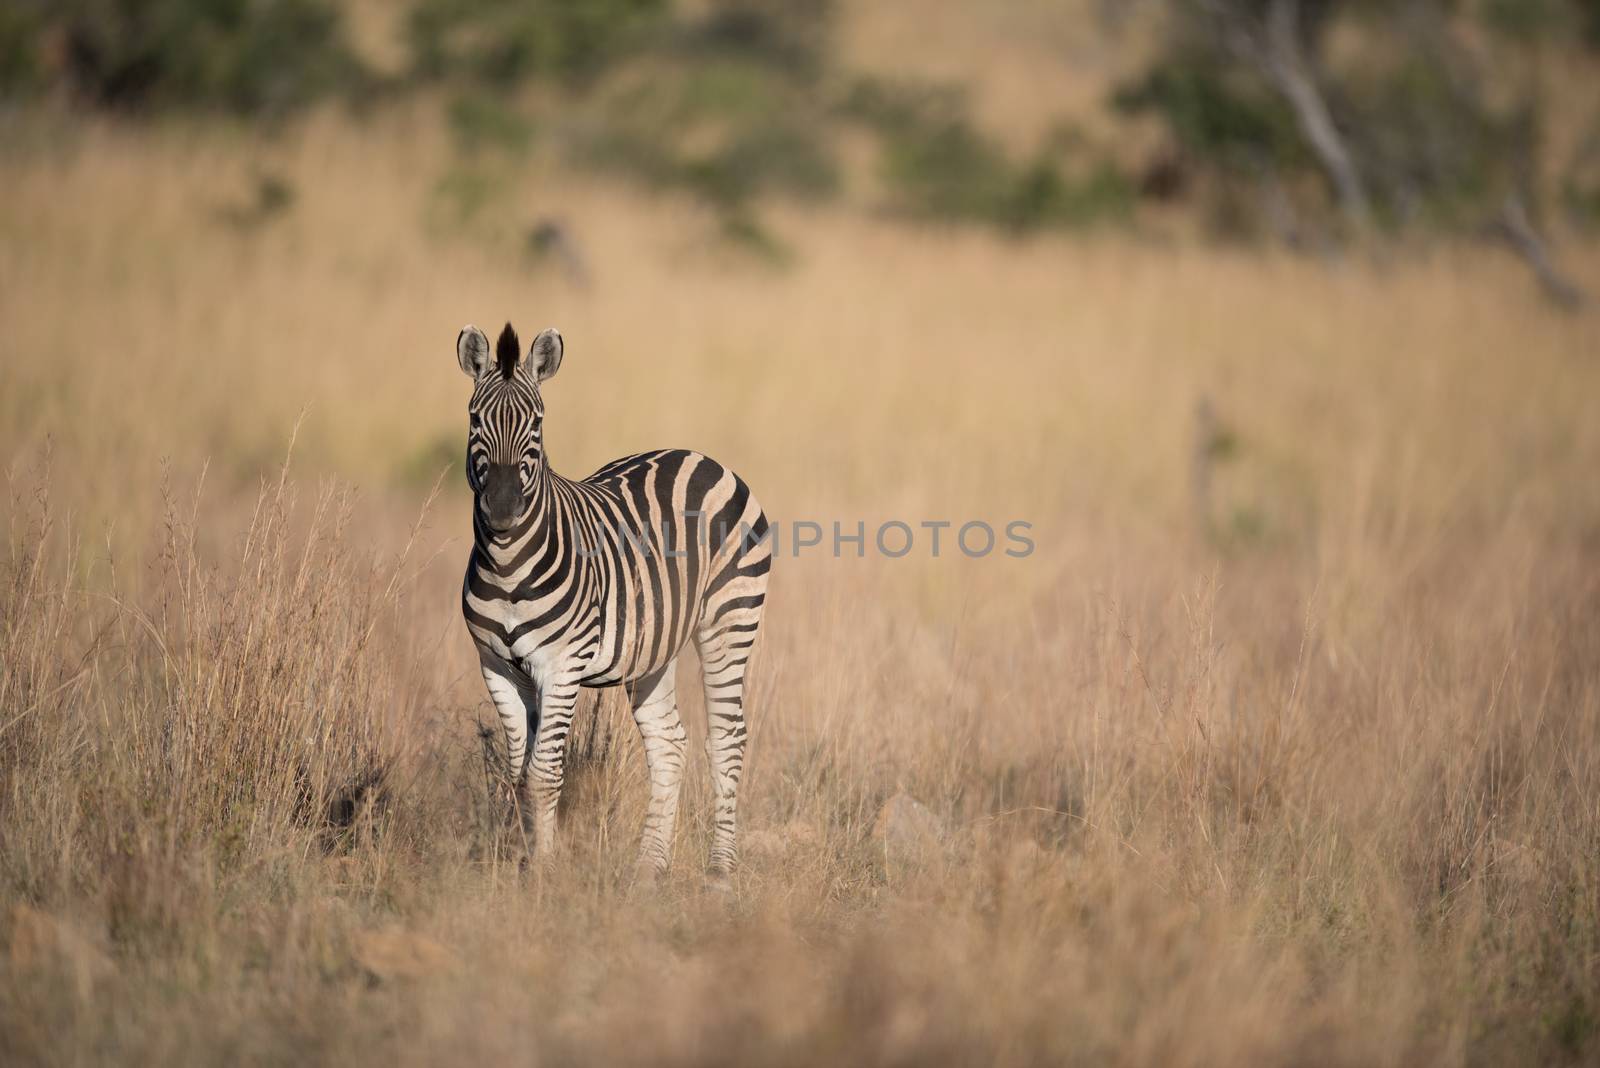 Zebra in the wilderness by ozkanzozmen